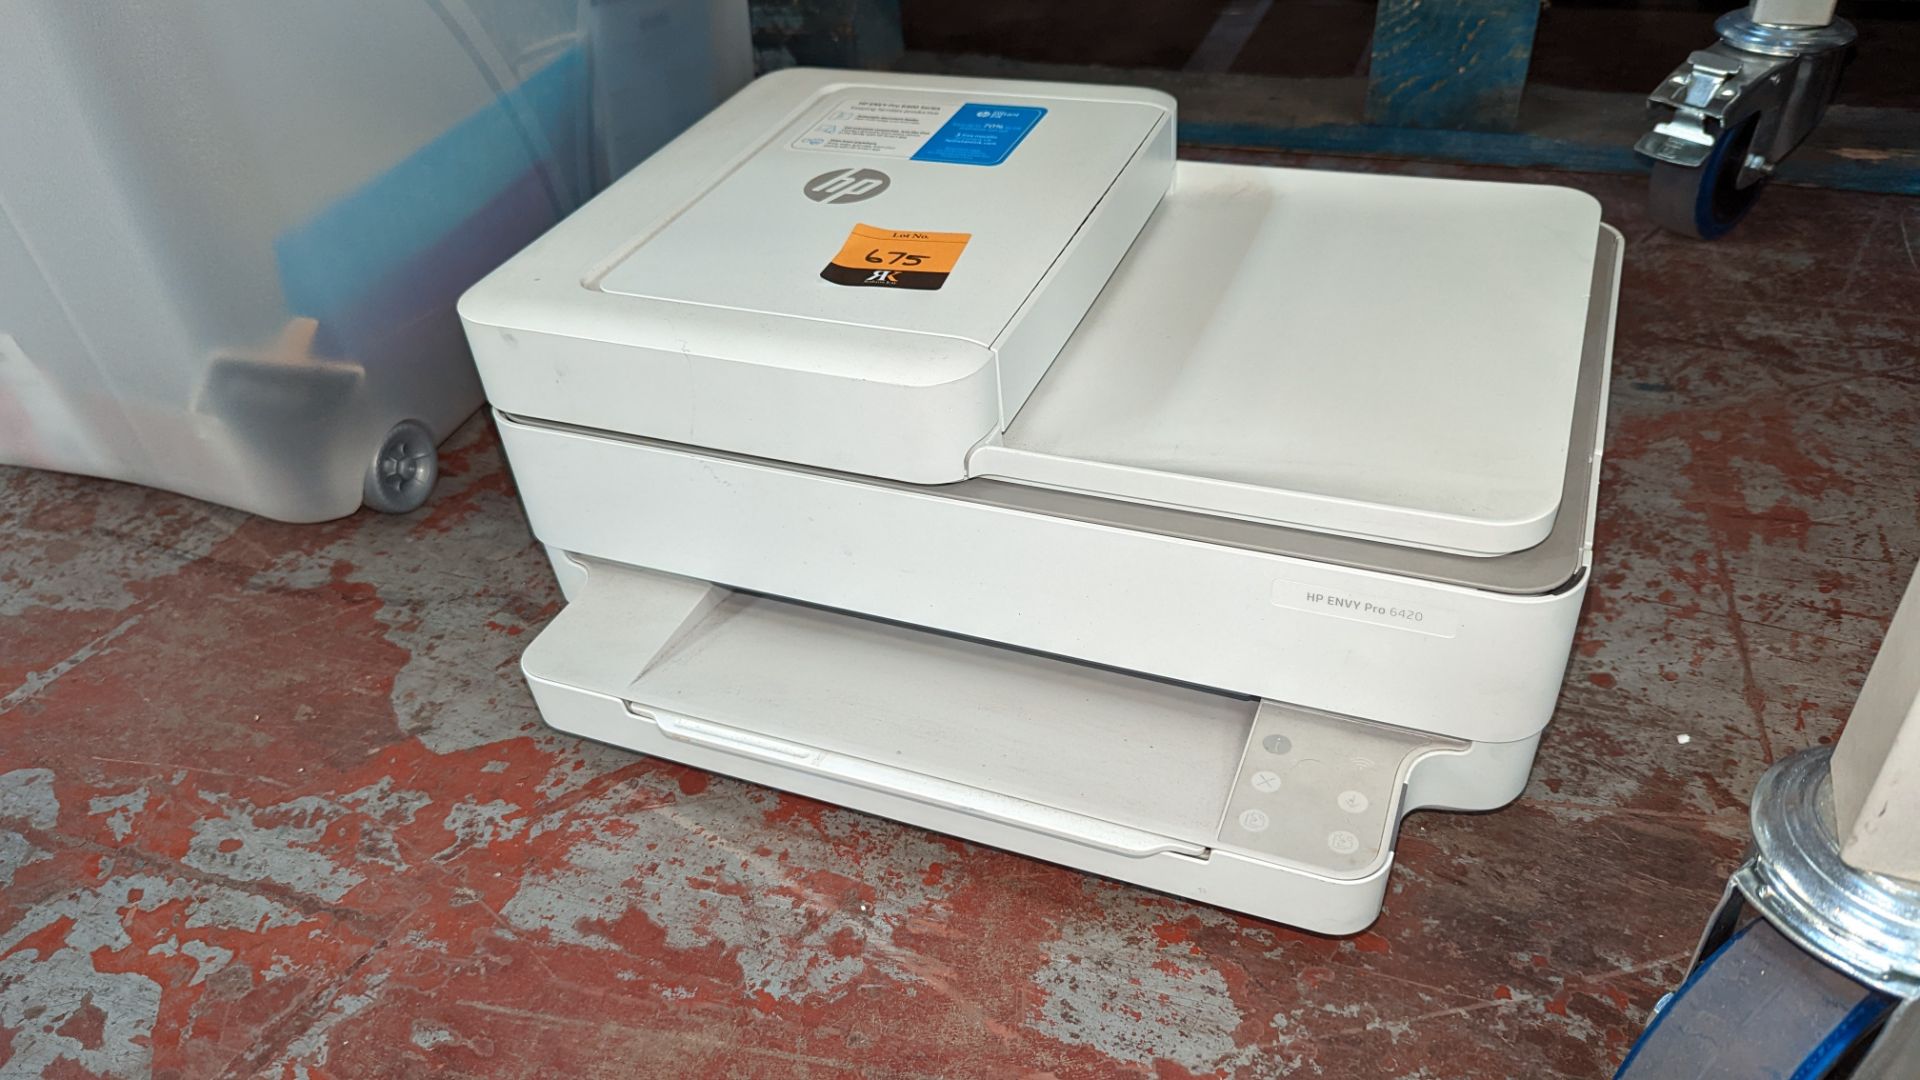 HP Envy Pro 6420 printer/copier